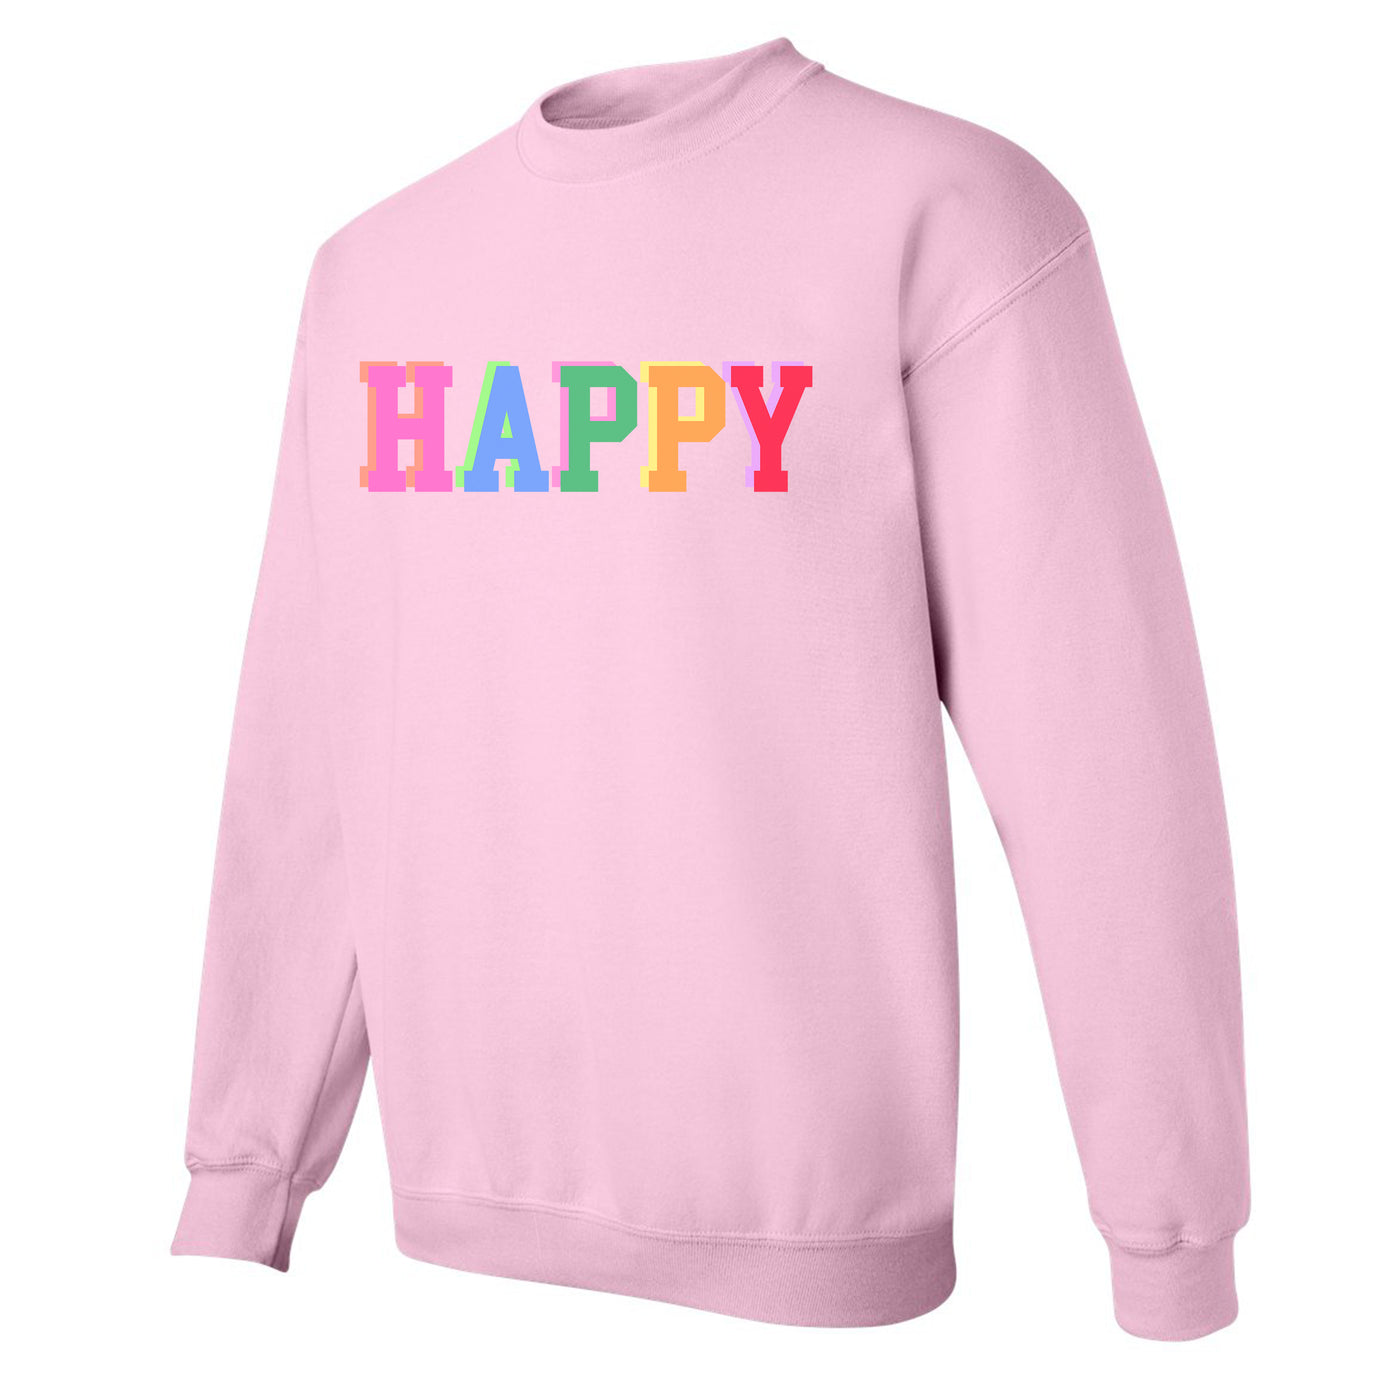 'Colorful Block Words' Crewneck Sweatshirt